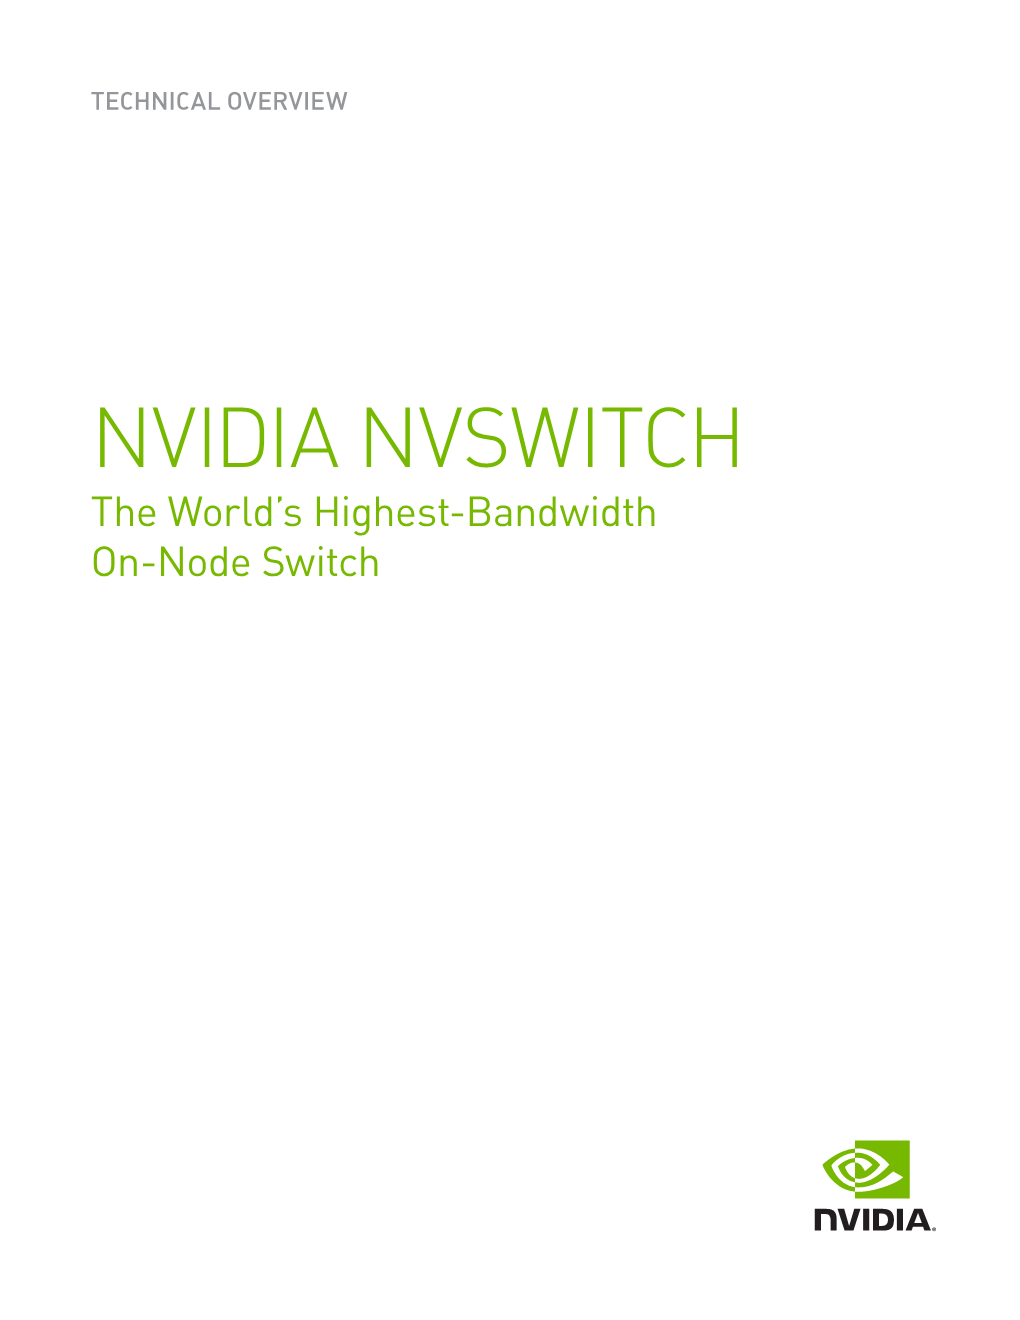 NVIDIA Nvswitch: the World's Highest-Bandwidth On-Node Switch